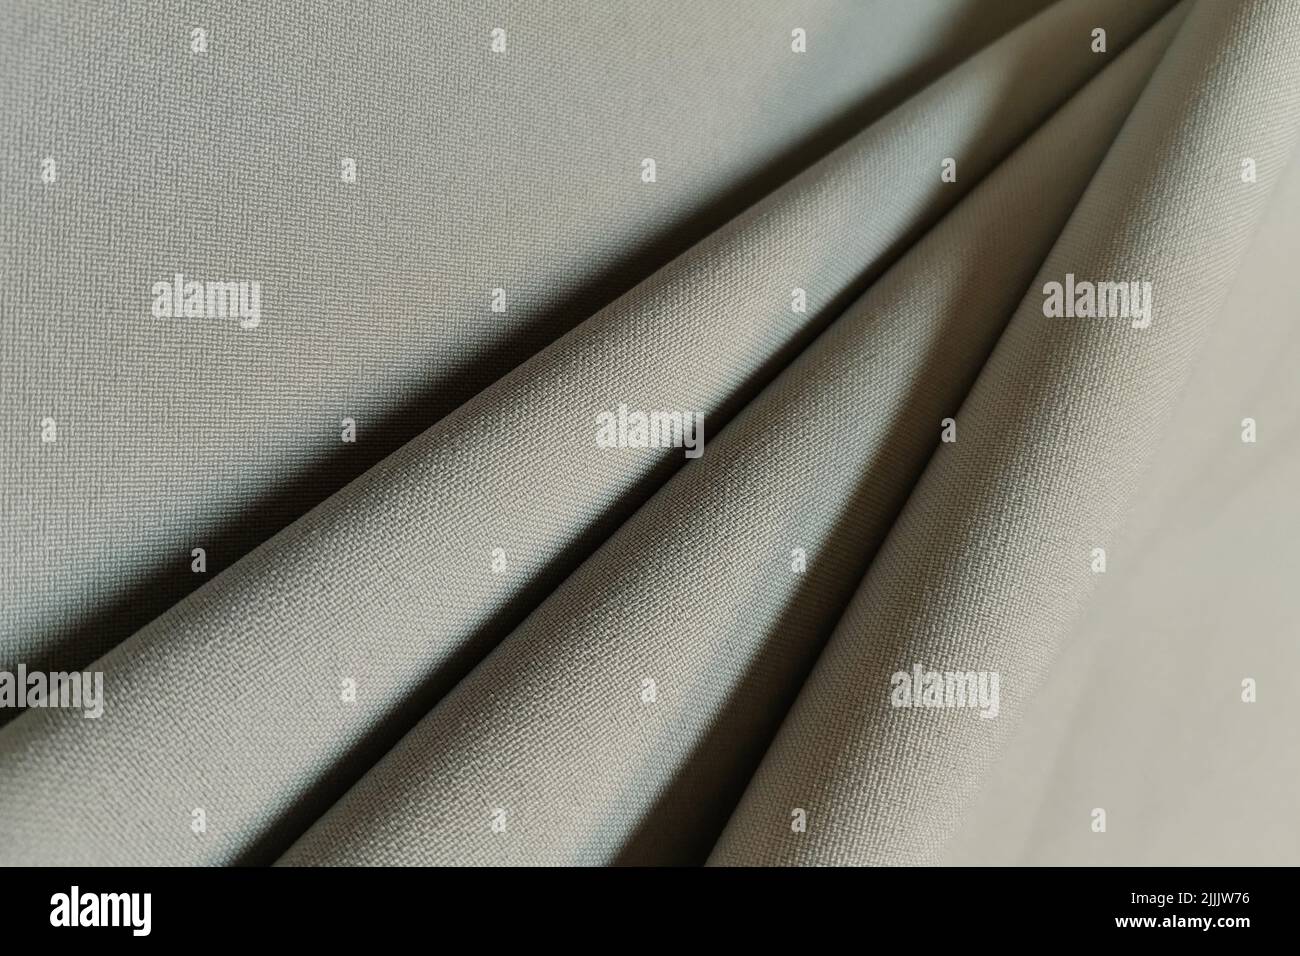 Beige crumpled or wavy fabric texture background. Abstract linen cloth soft waves. Gabardine wool fabric. Merino yarn. Smooth elegant luxury cloth Stock Photo